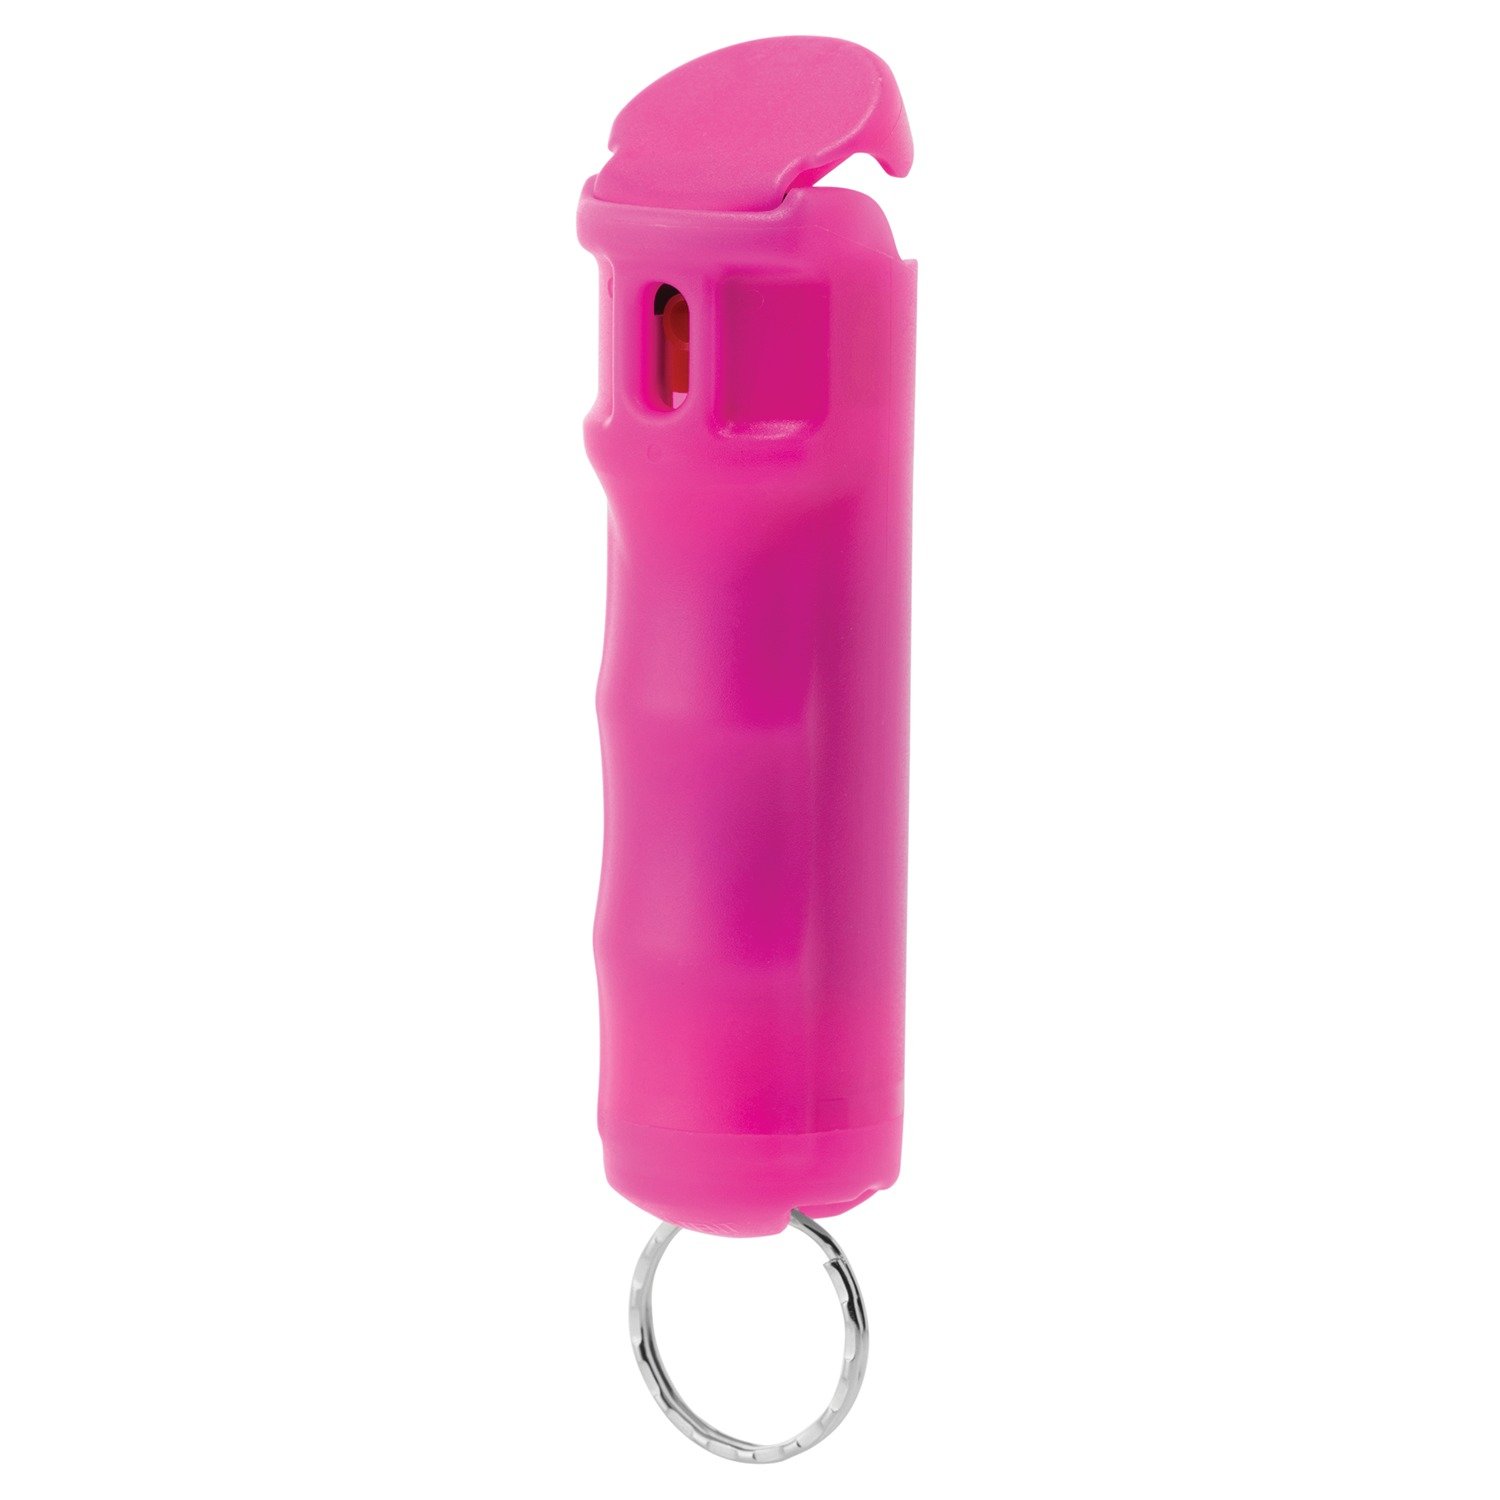 MACE 80787 Compact Model Pepper Spray (Neon Pink)